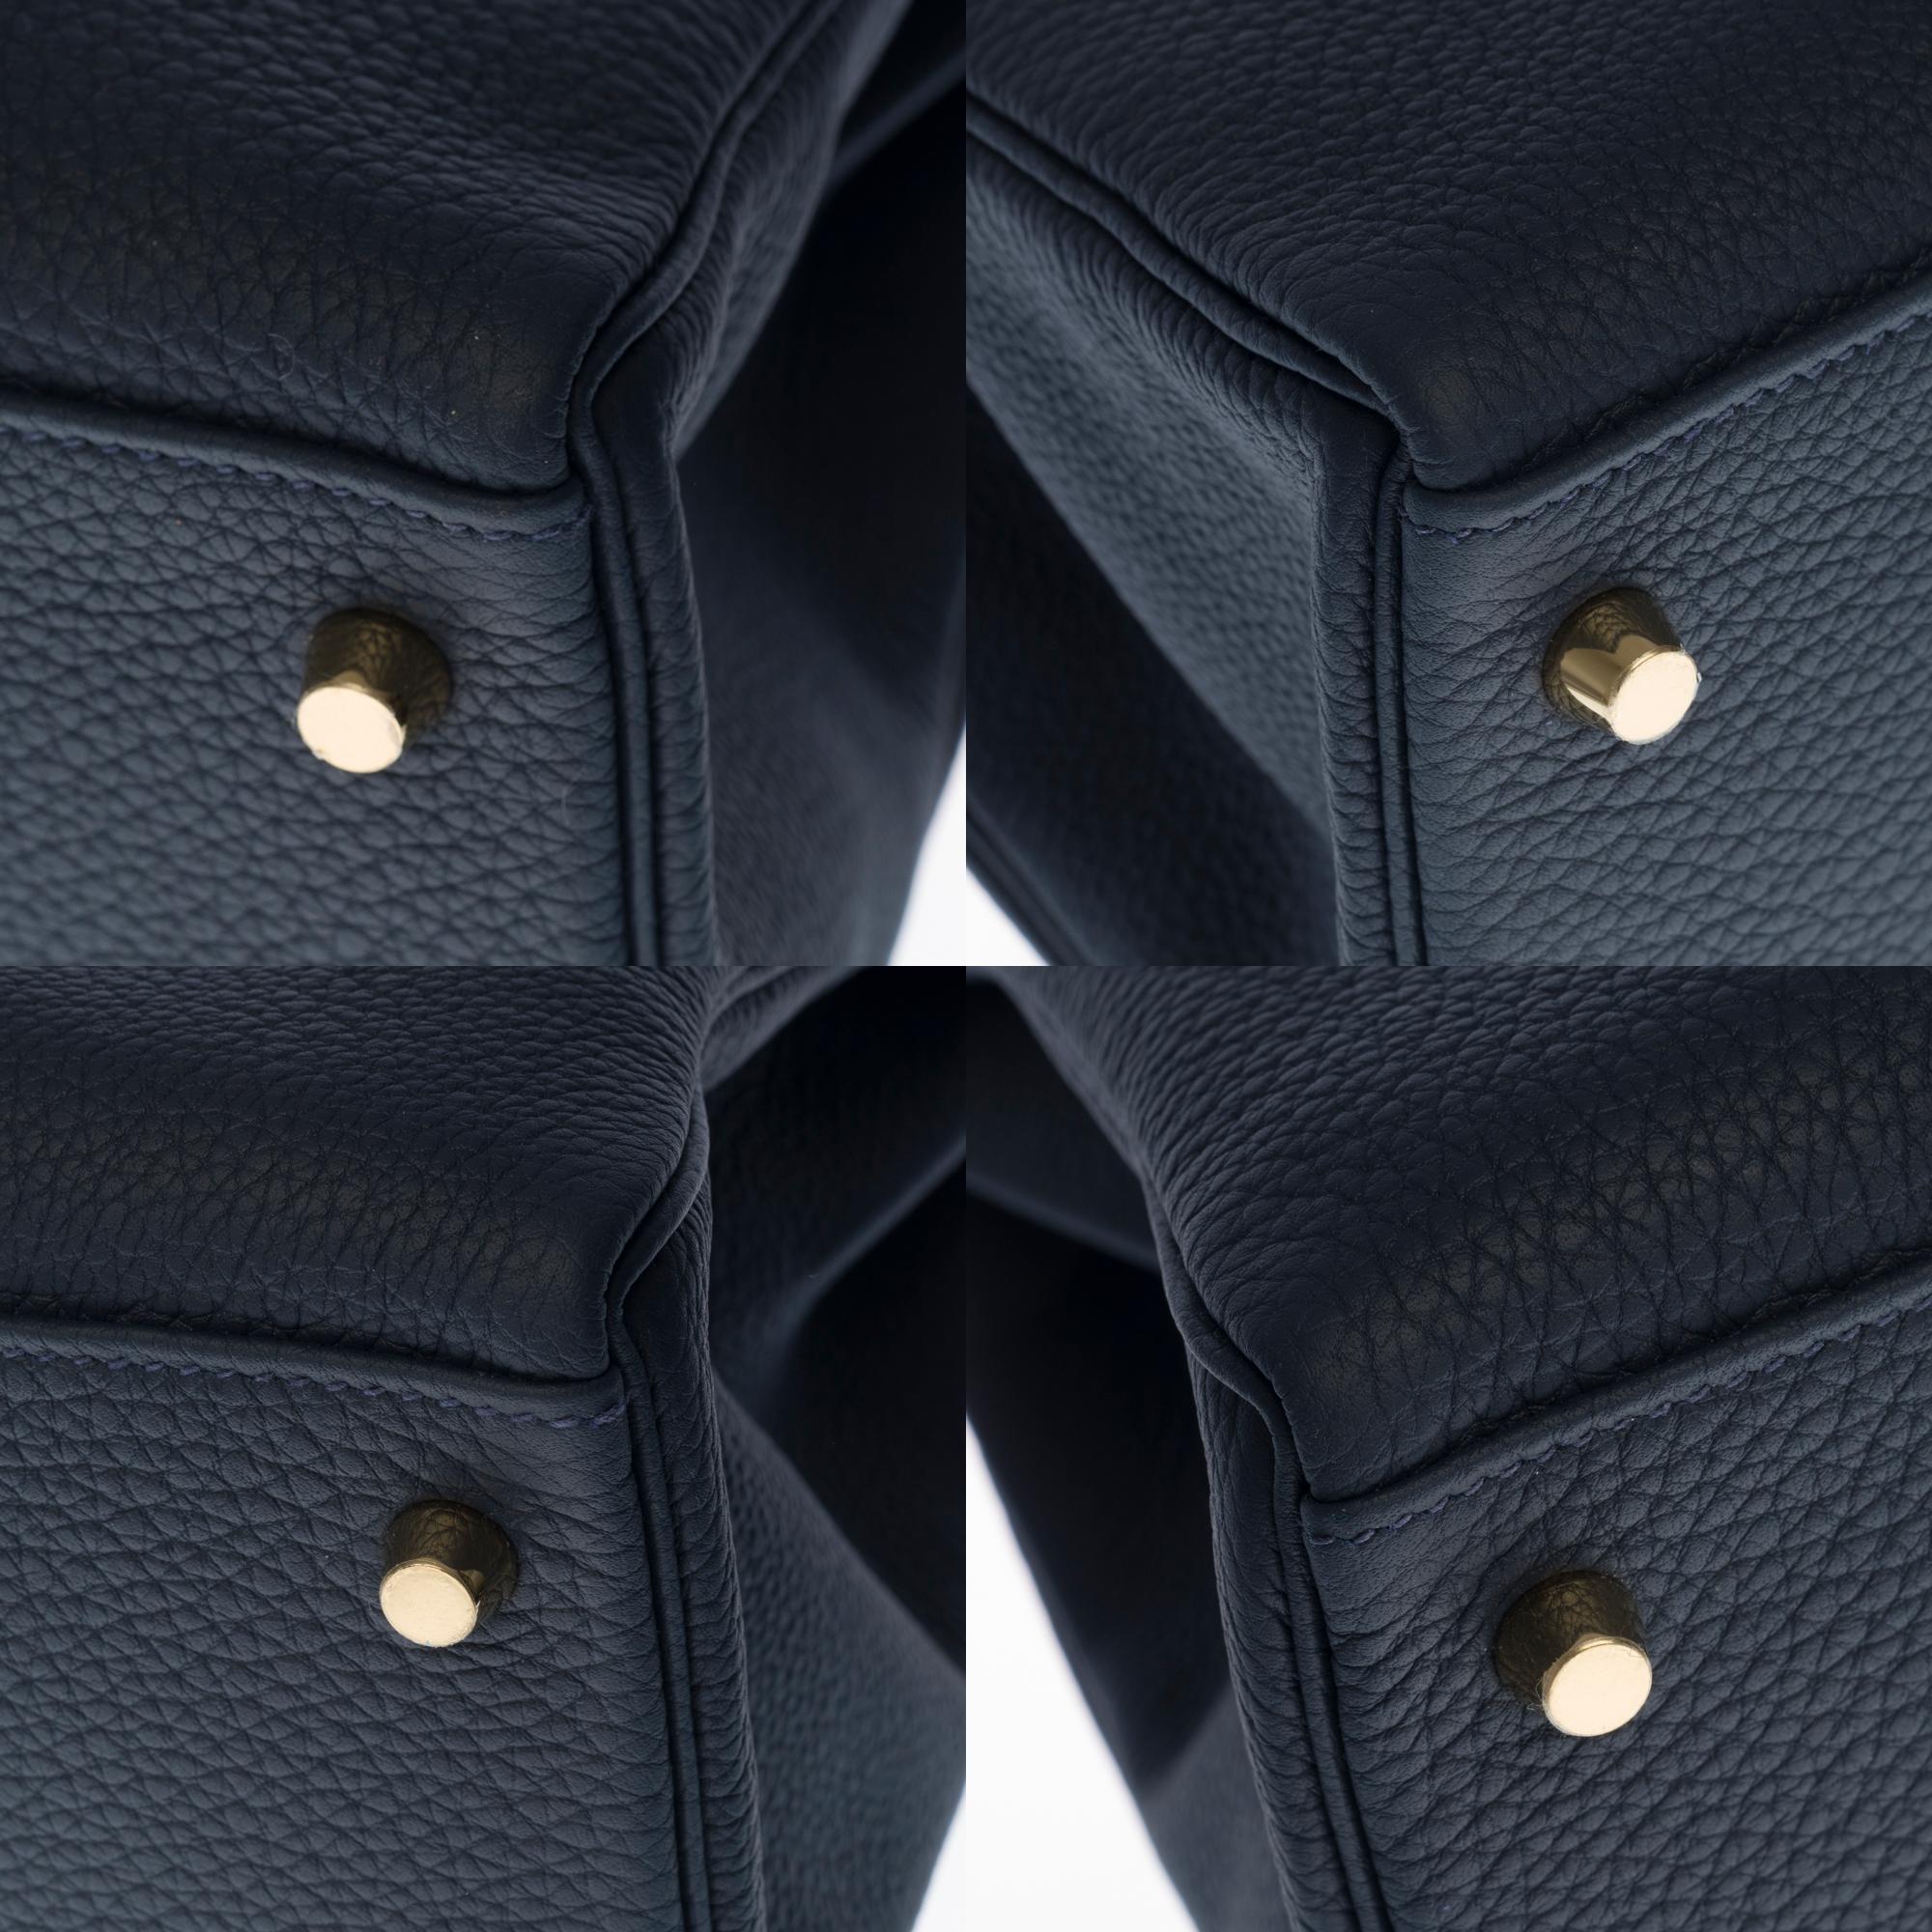 NEW- Hermès Kelly 32cm handbag with strap in bleu nuit togo leather, GHW 6